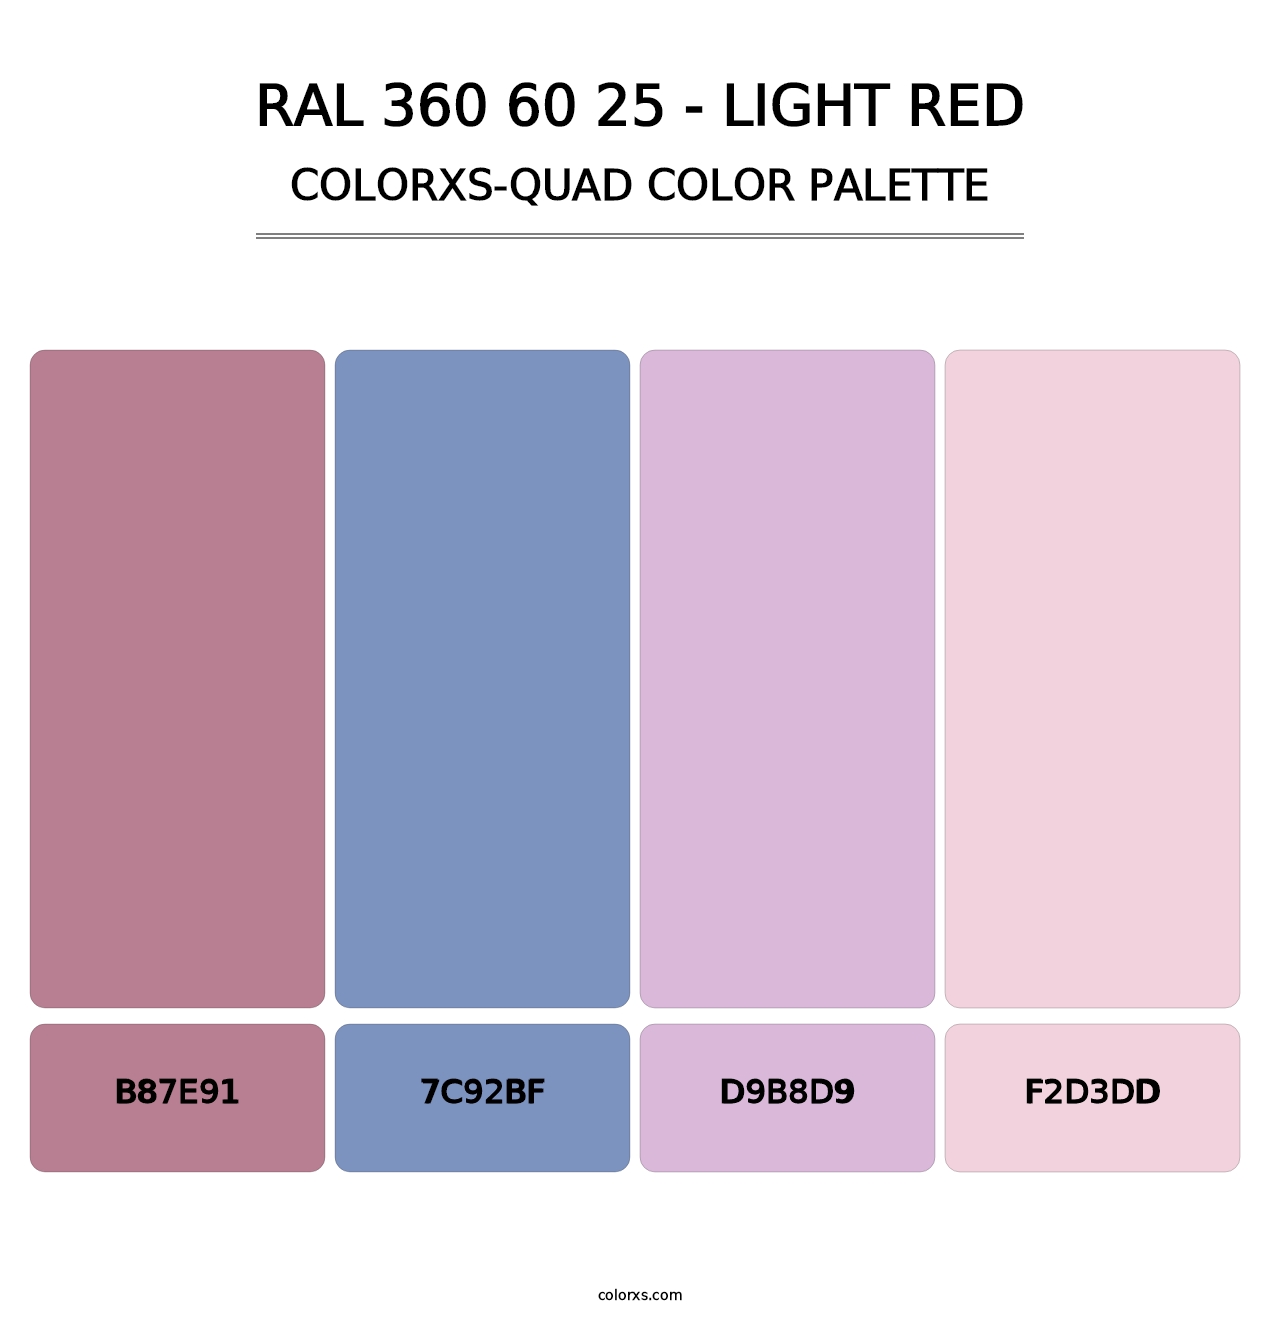 RAL 360 60 25 - Light Red - Colorxs Quad Palette